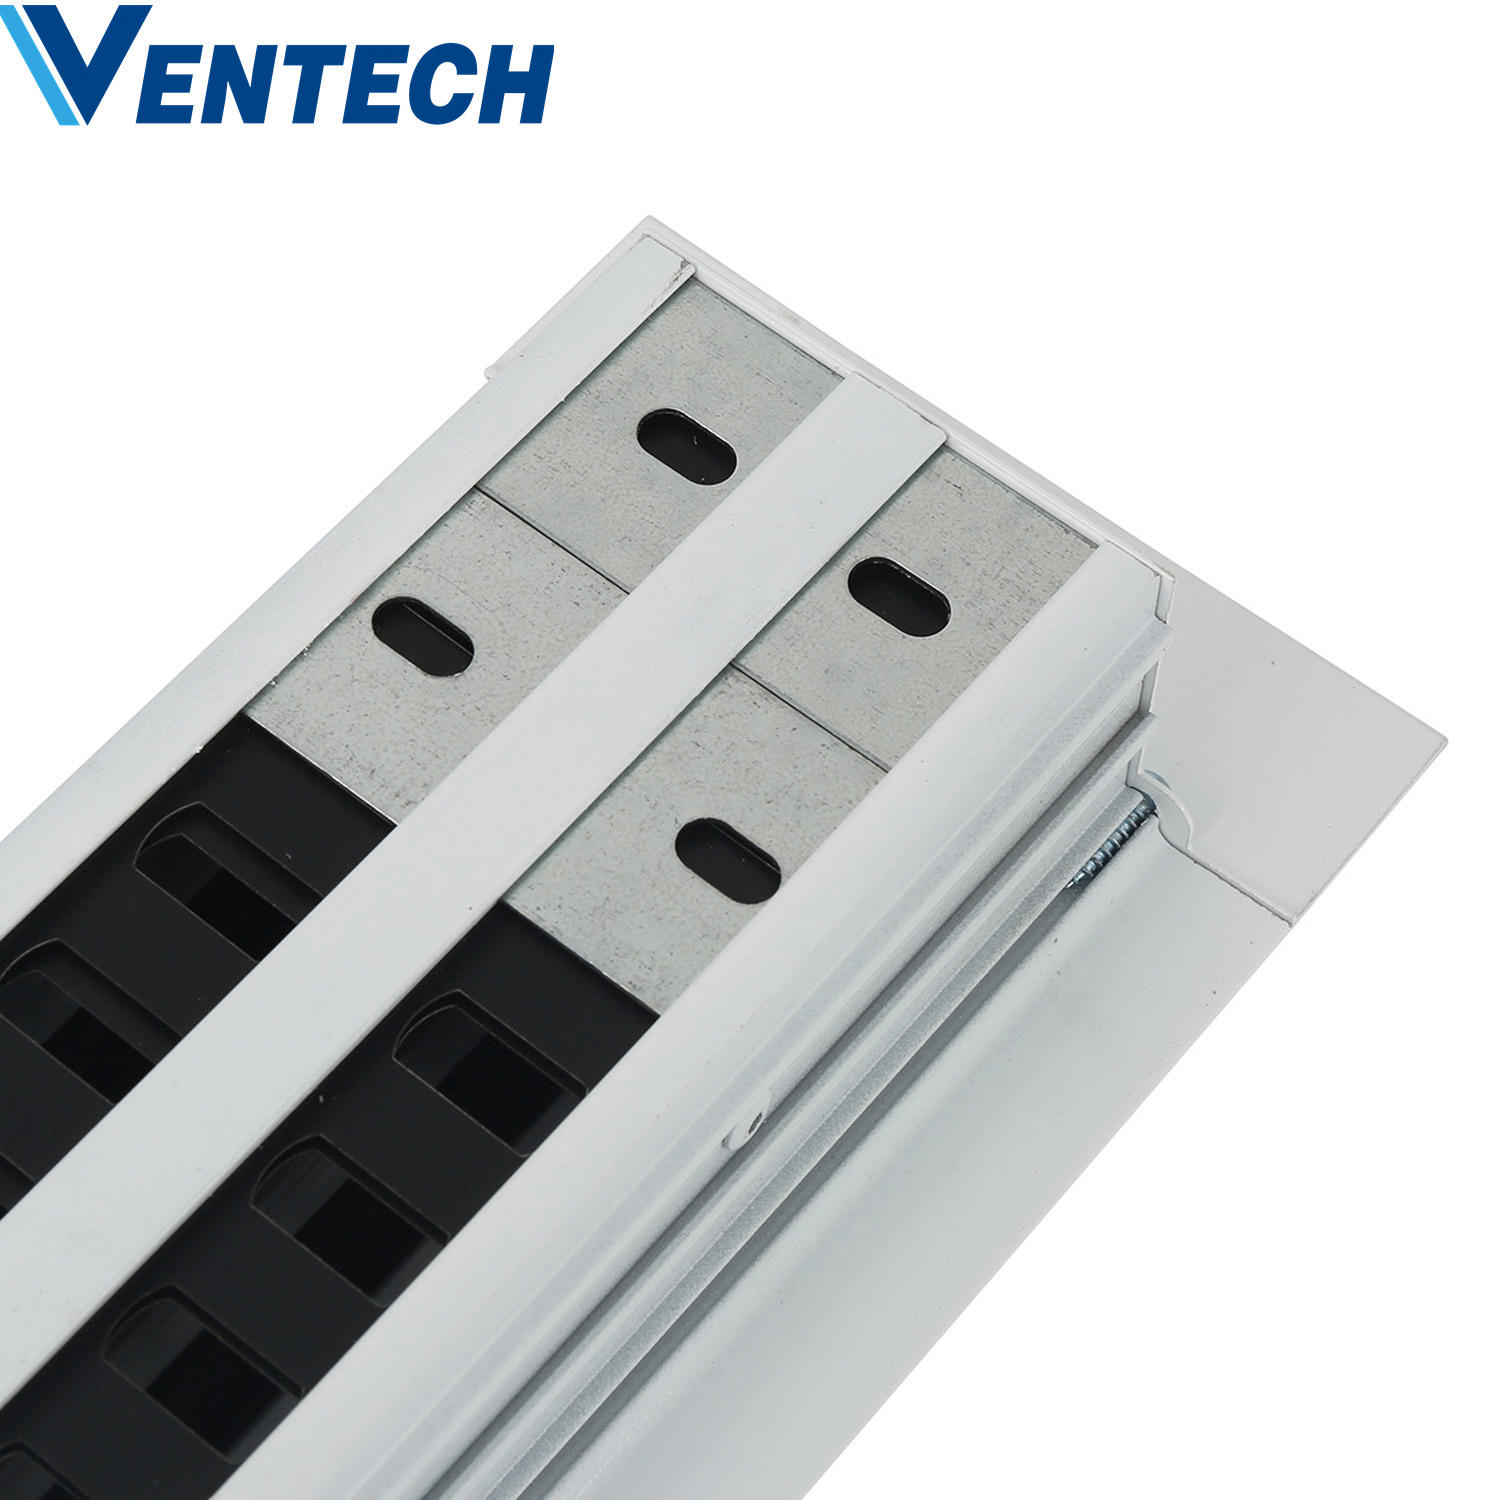 Hvac  Exhaust Ceiling Air Ventilation Conditioning Aluminum Supply Linear Slot VAV Diffuser Price With Plenum Box